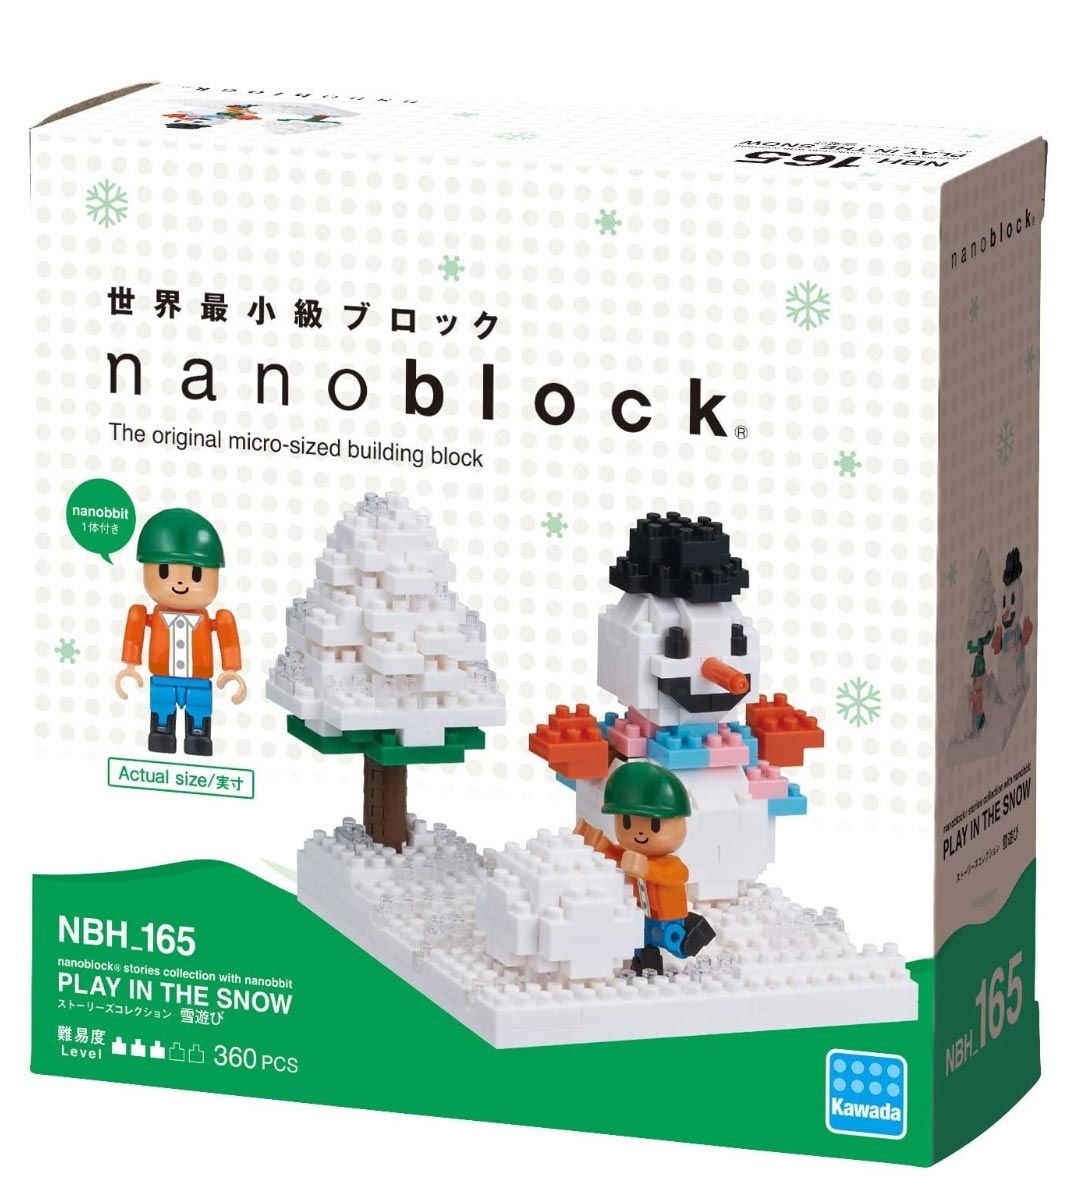 Nanoblock - Jouer dans la neige - Stories collection with nanobbit - NBH 165